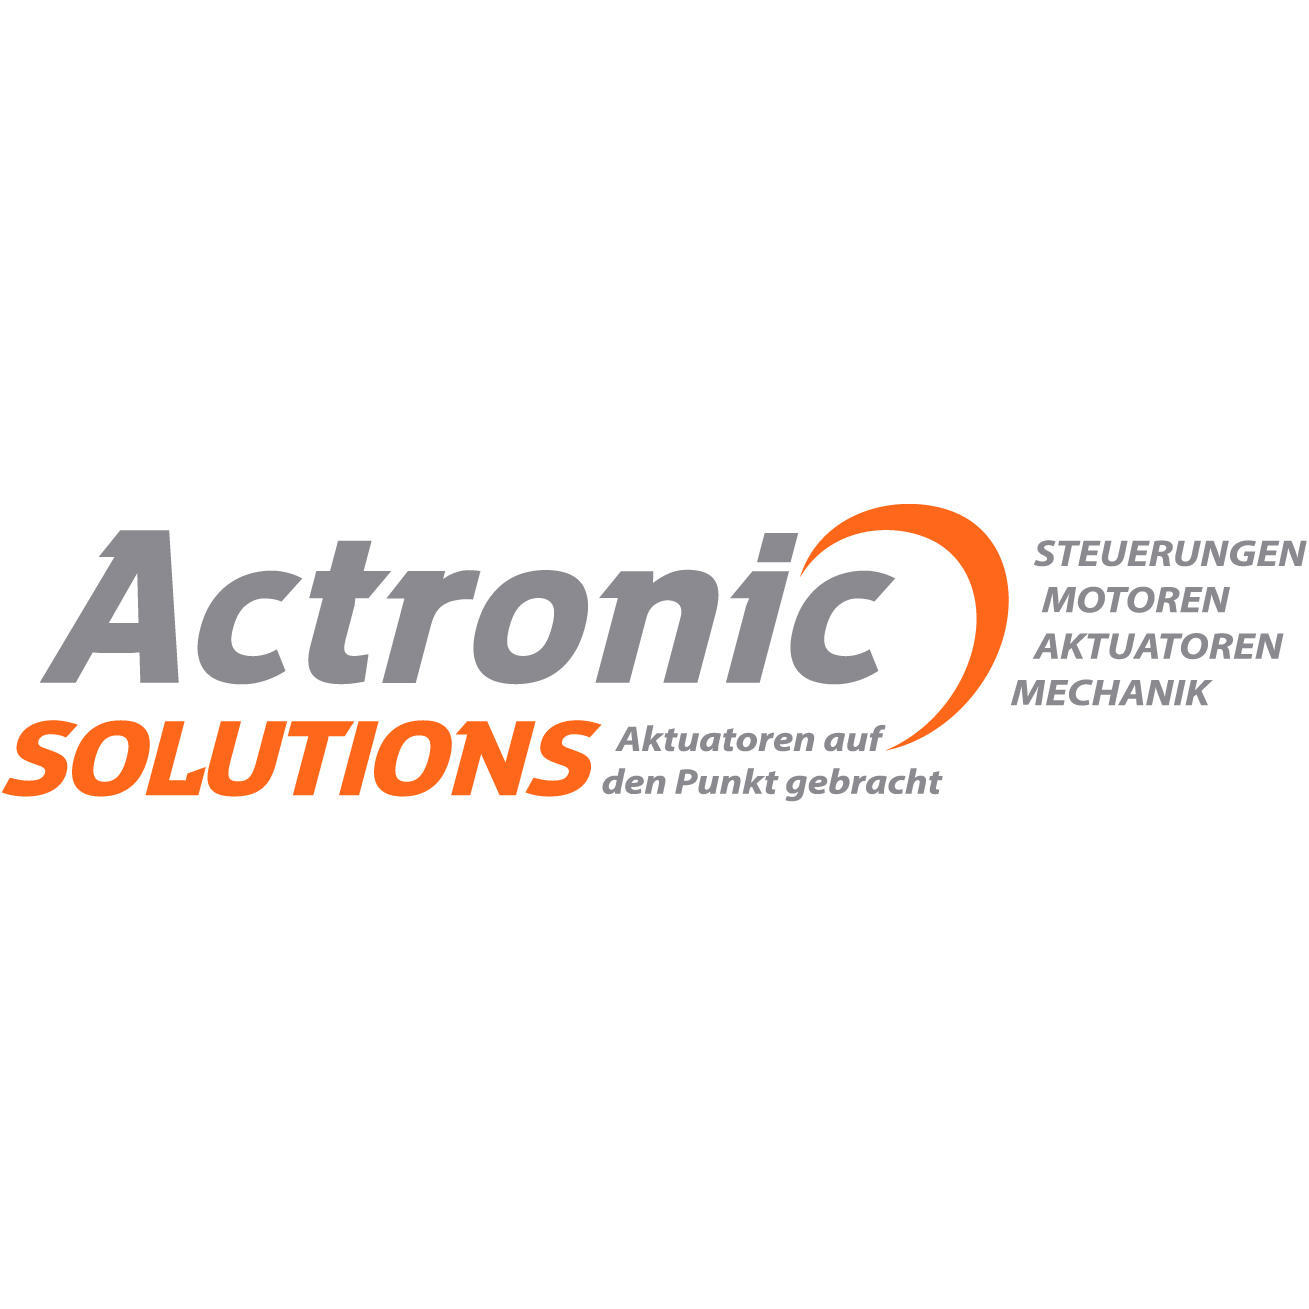 Bild zu Actronic-Solutions GmbH in Adelsdorf in Mittelfranken